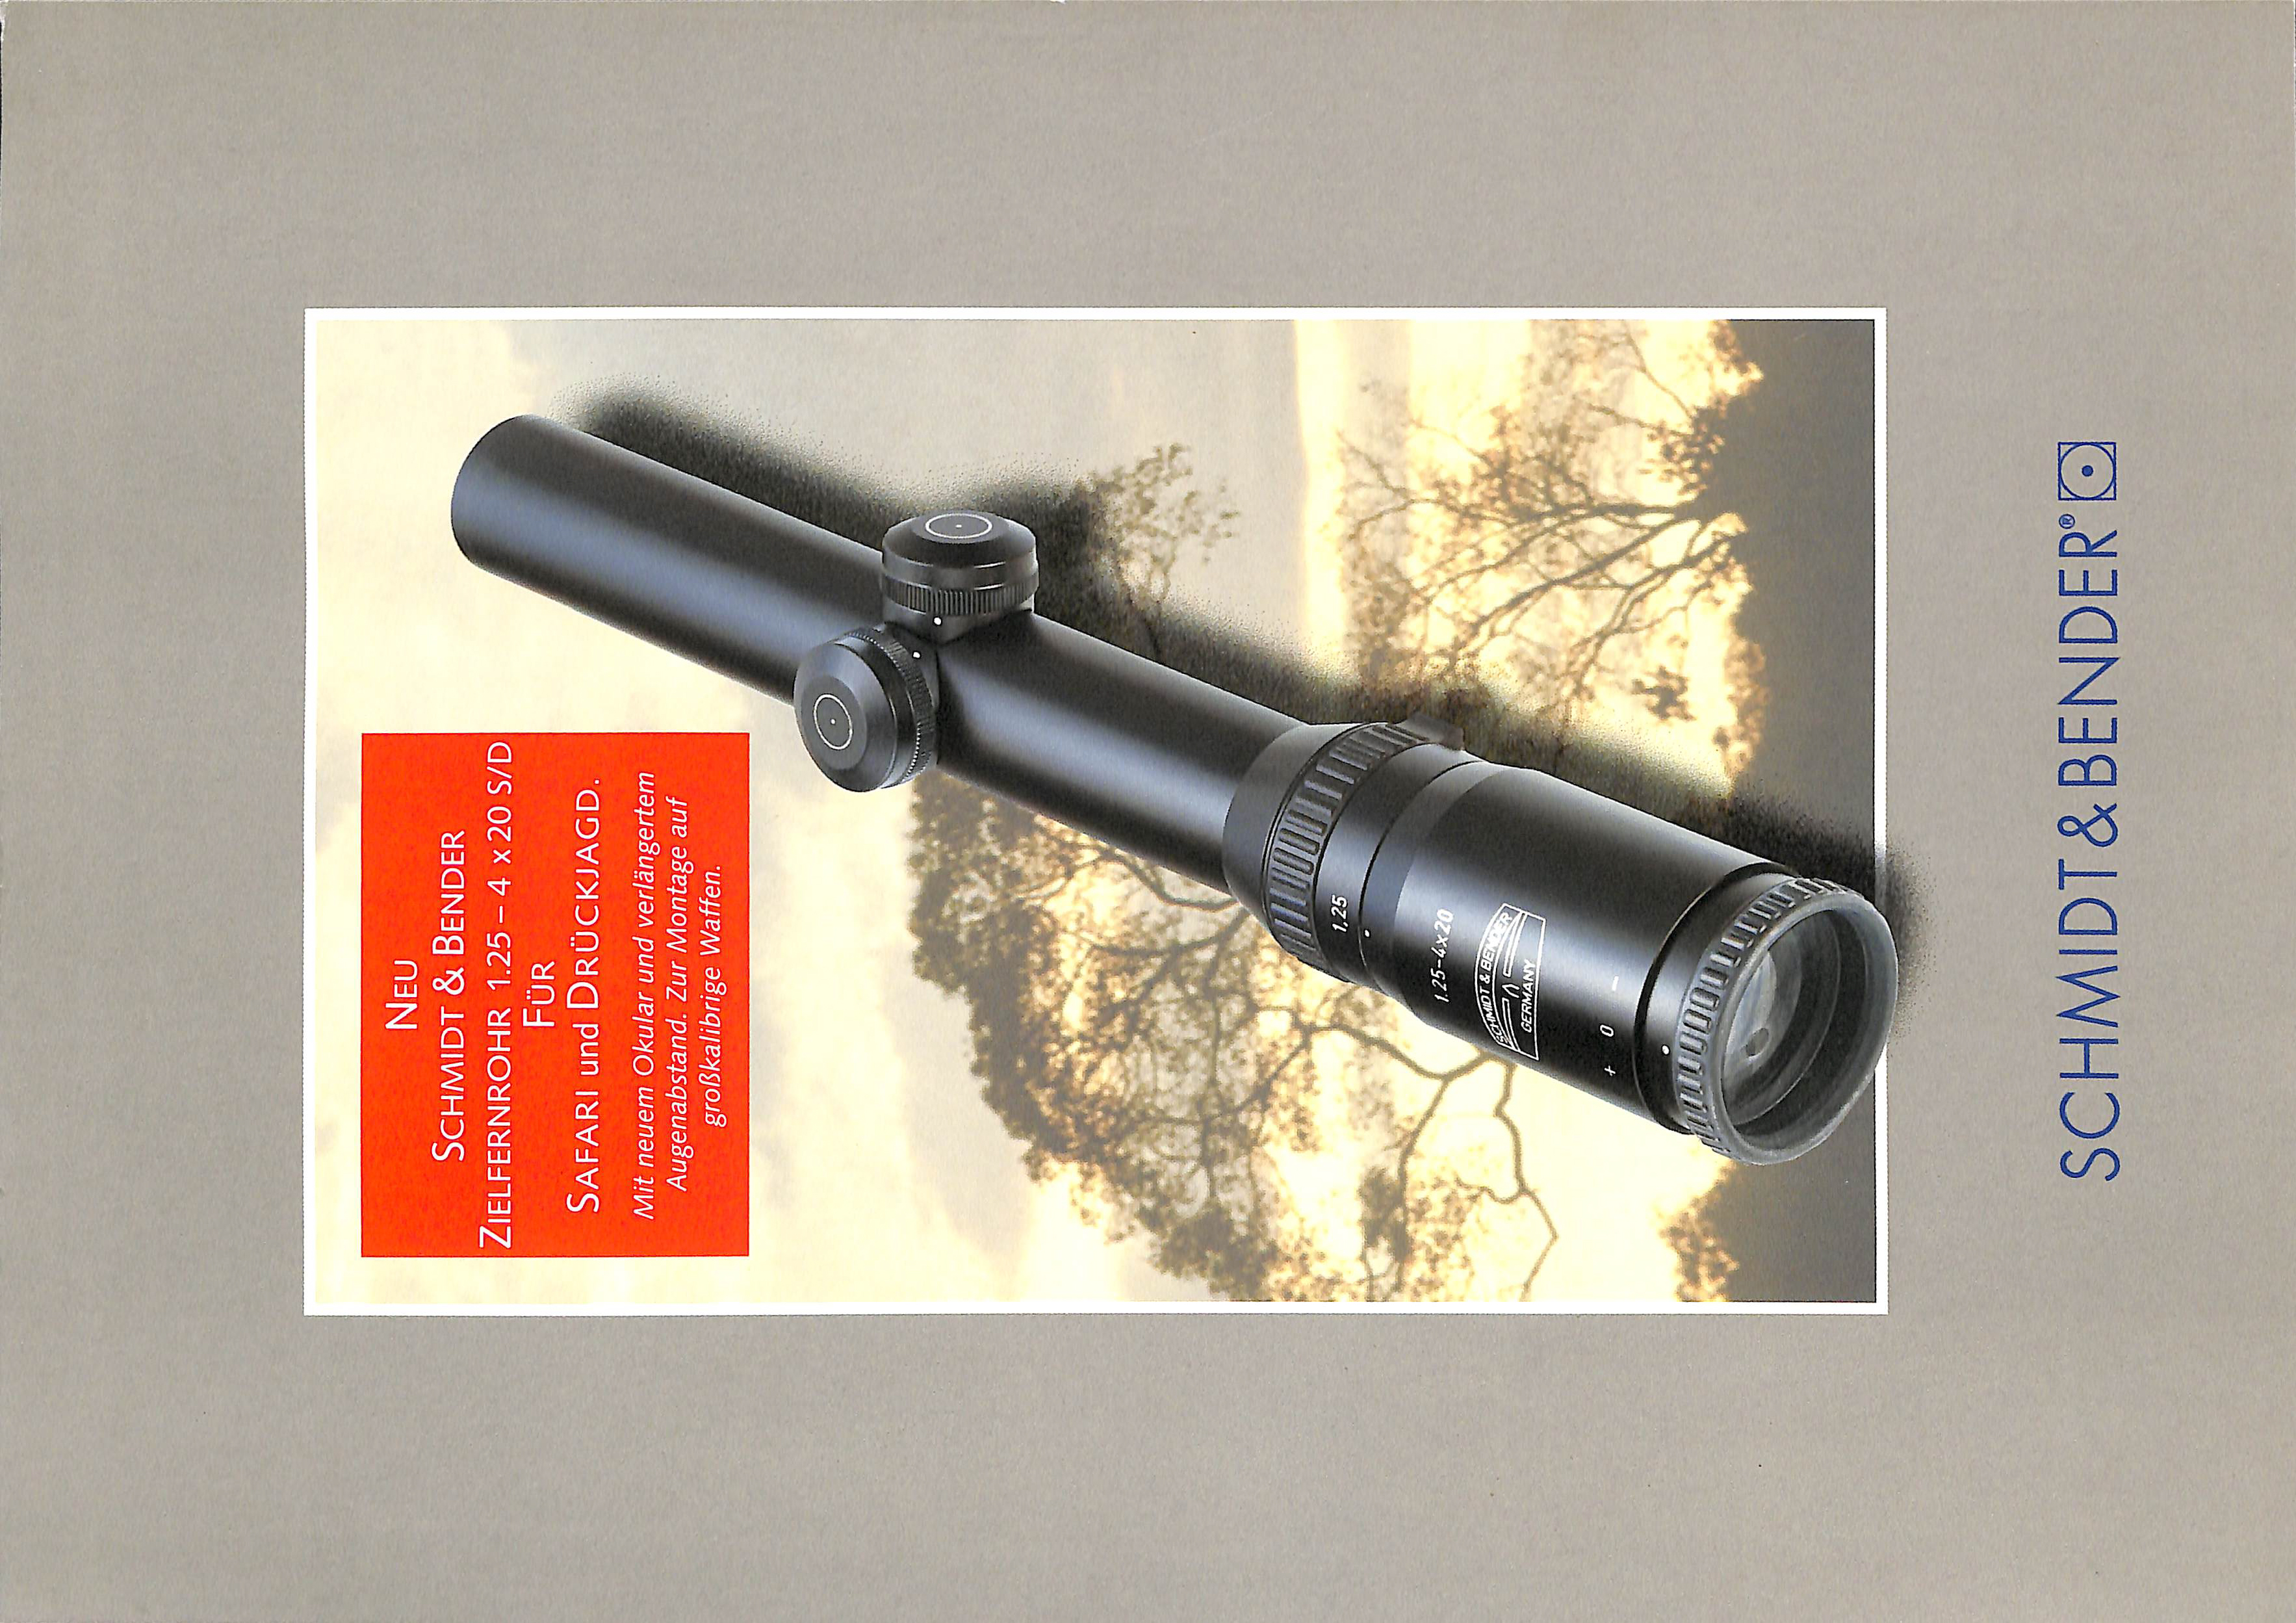 New 1.25-4x20 riflescope for safari and driven hunt